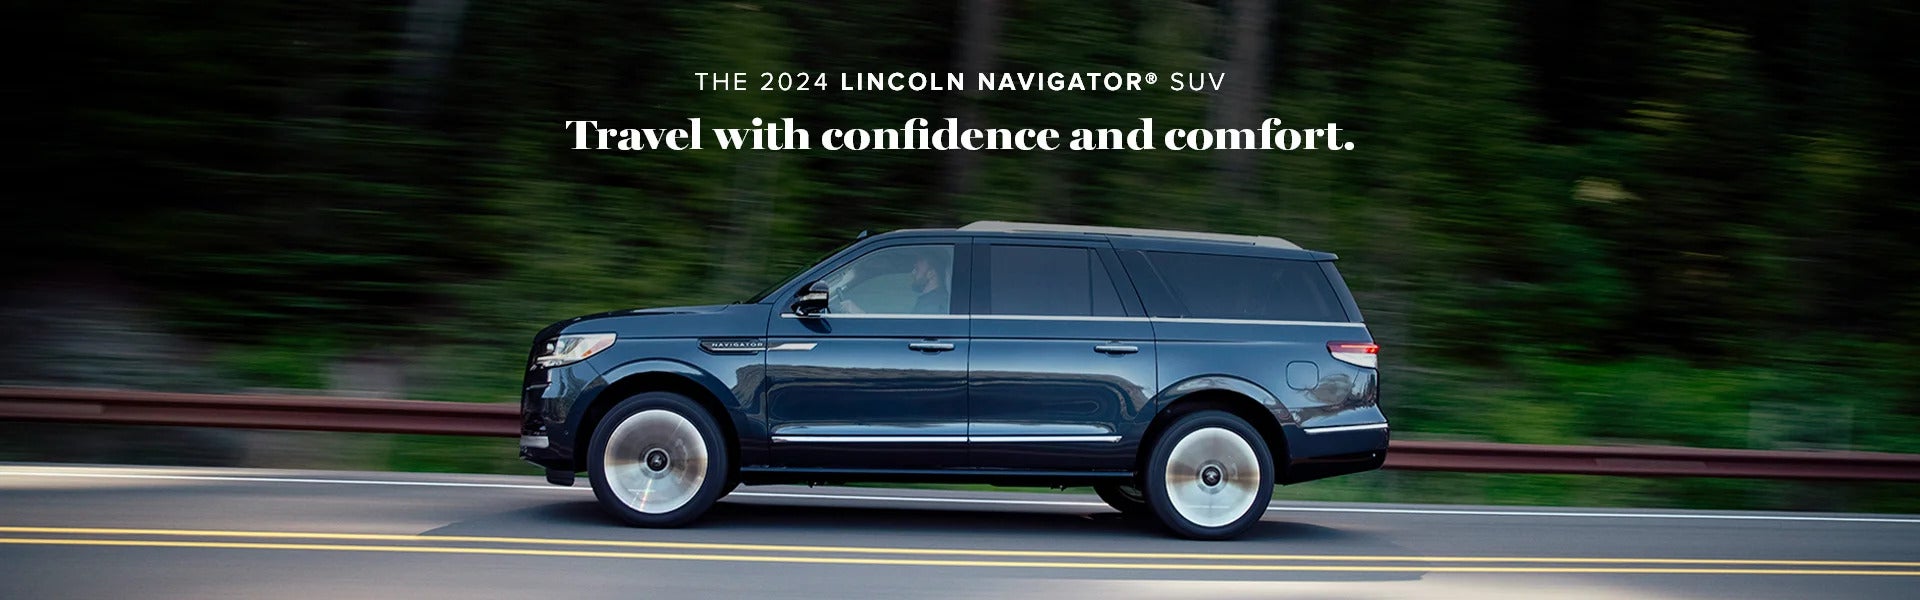 The 2024 Lincoln Navigator at North Park Lincoln at Dominion